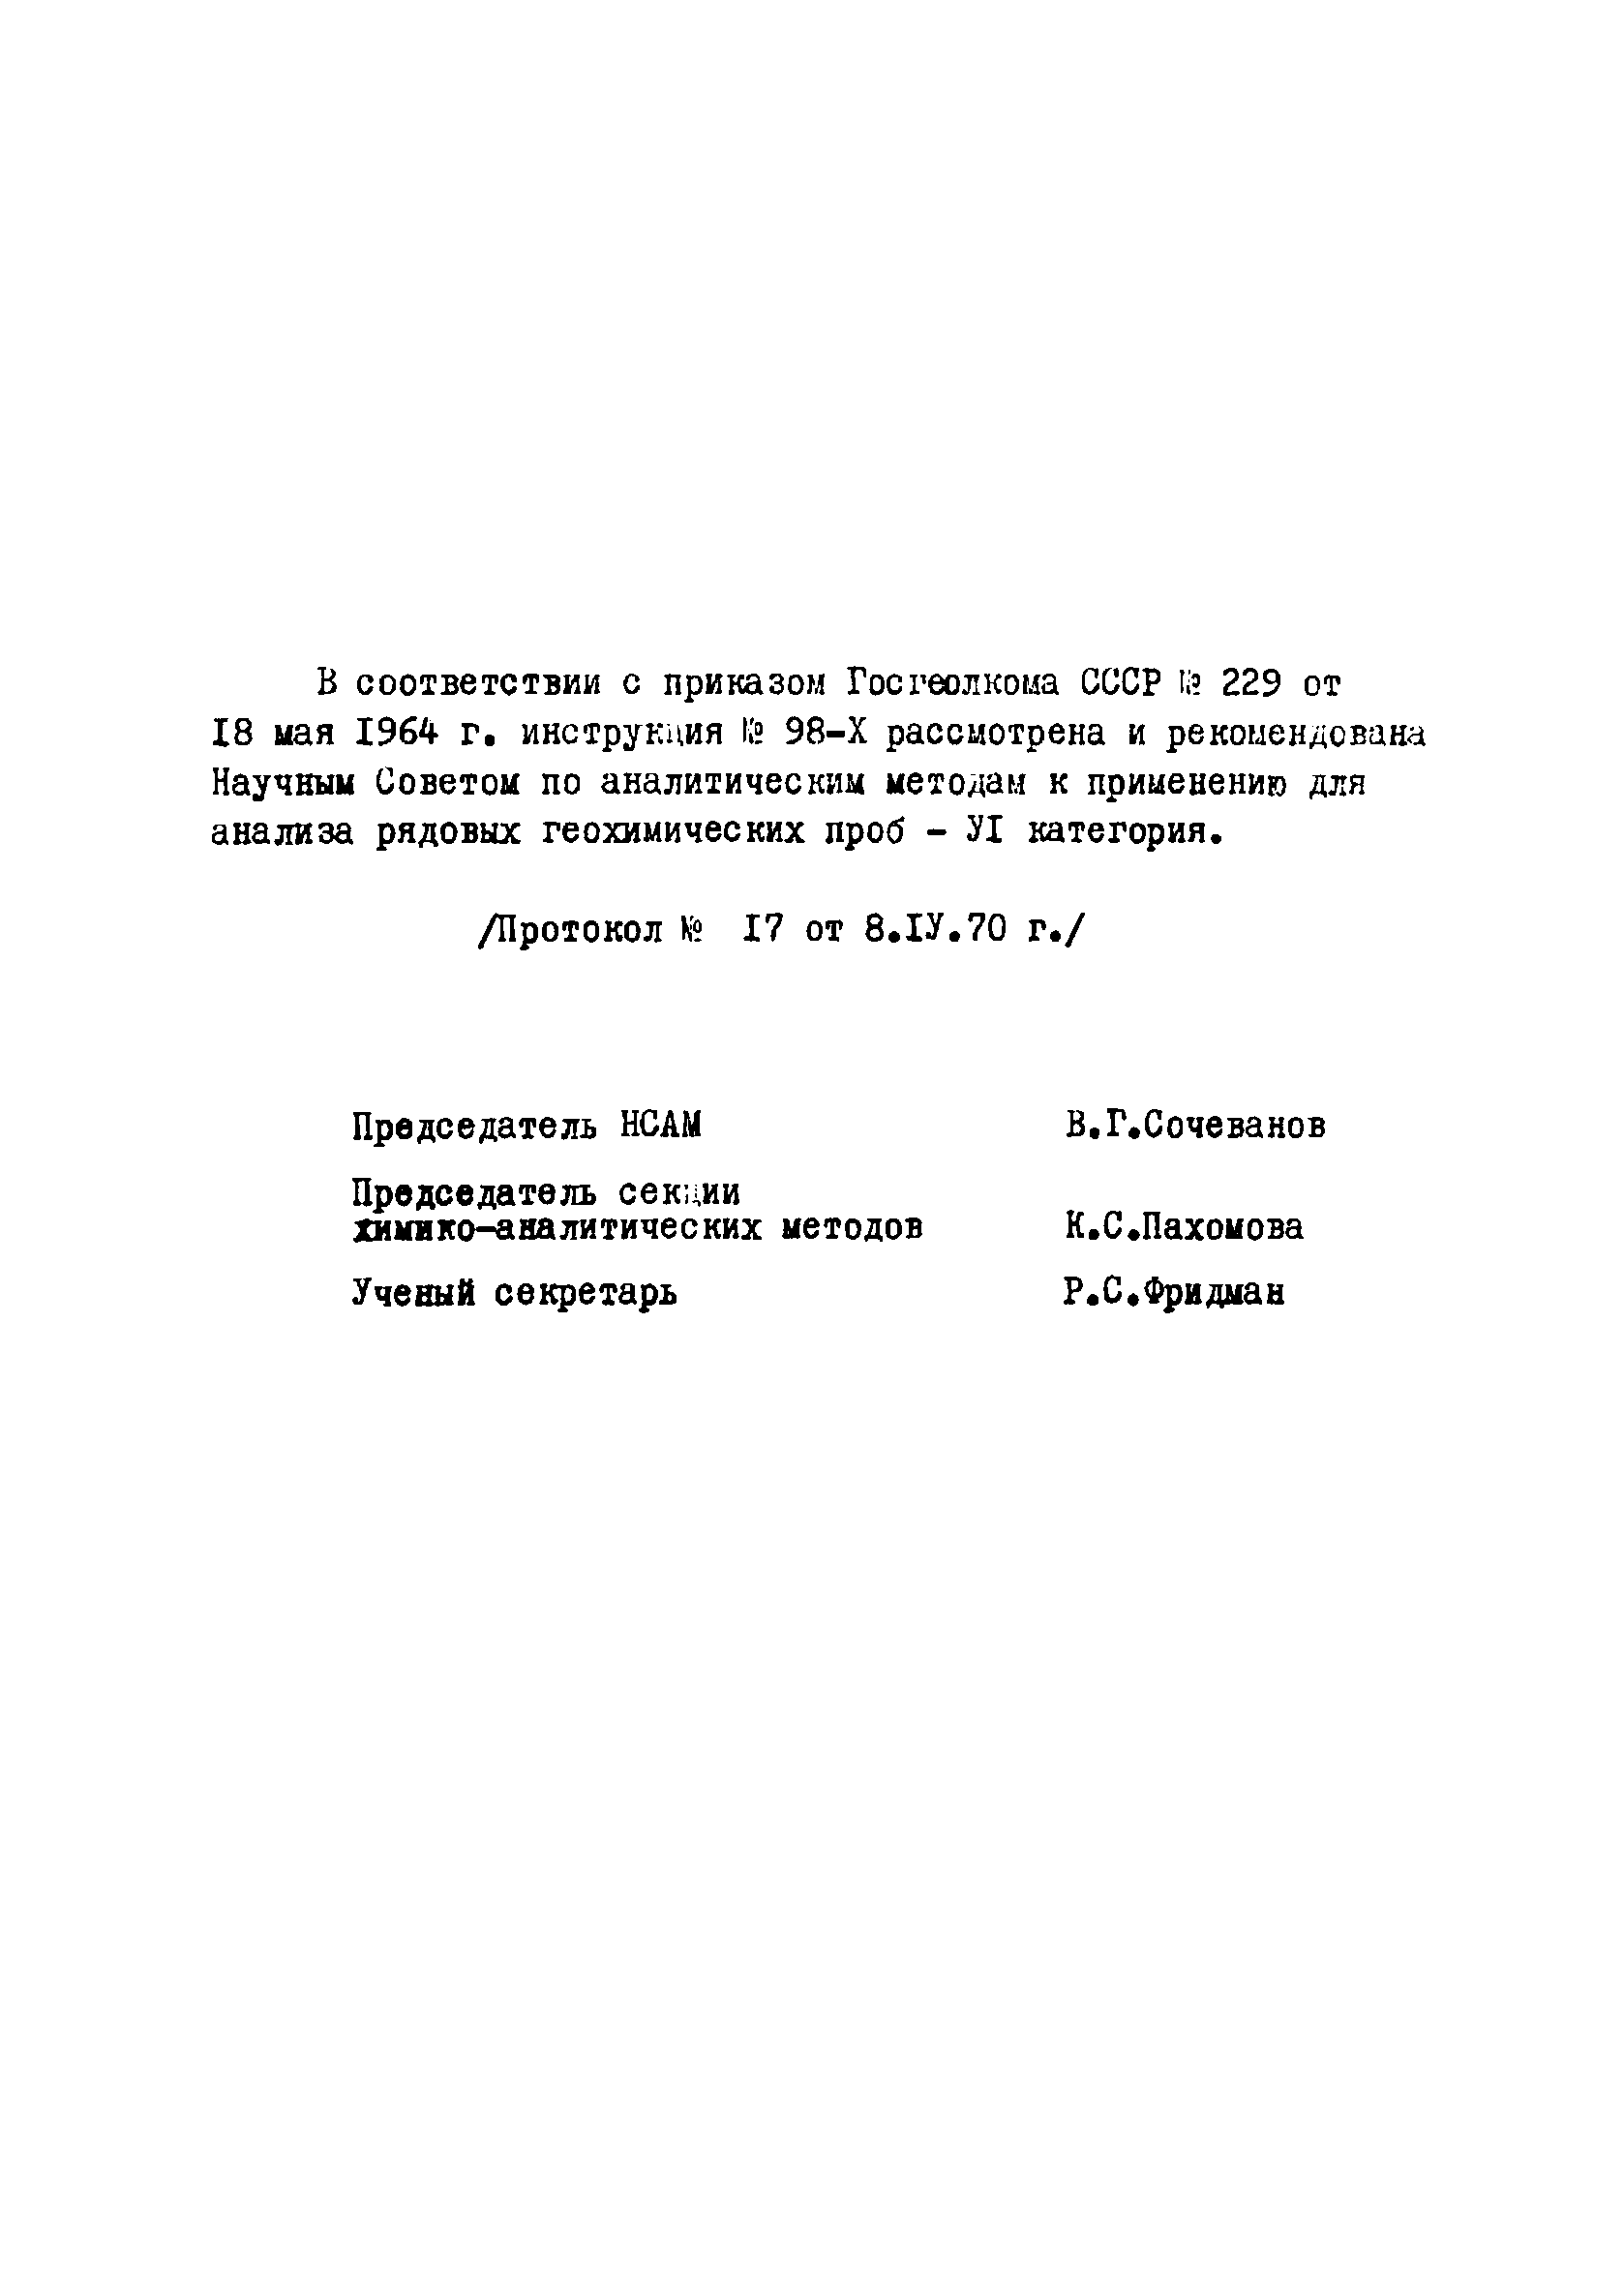 Инструкция НСАМ 98-Х